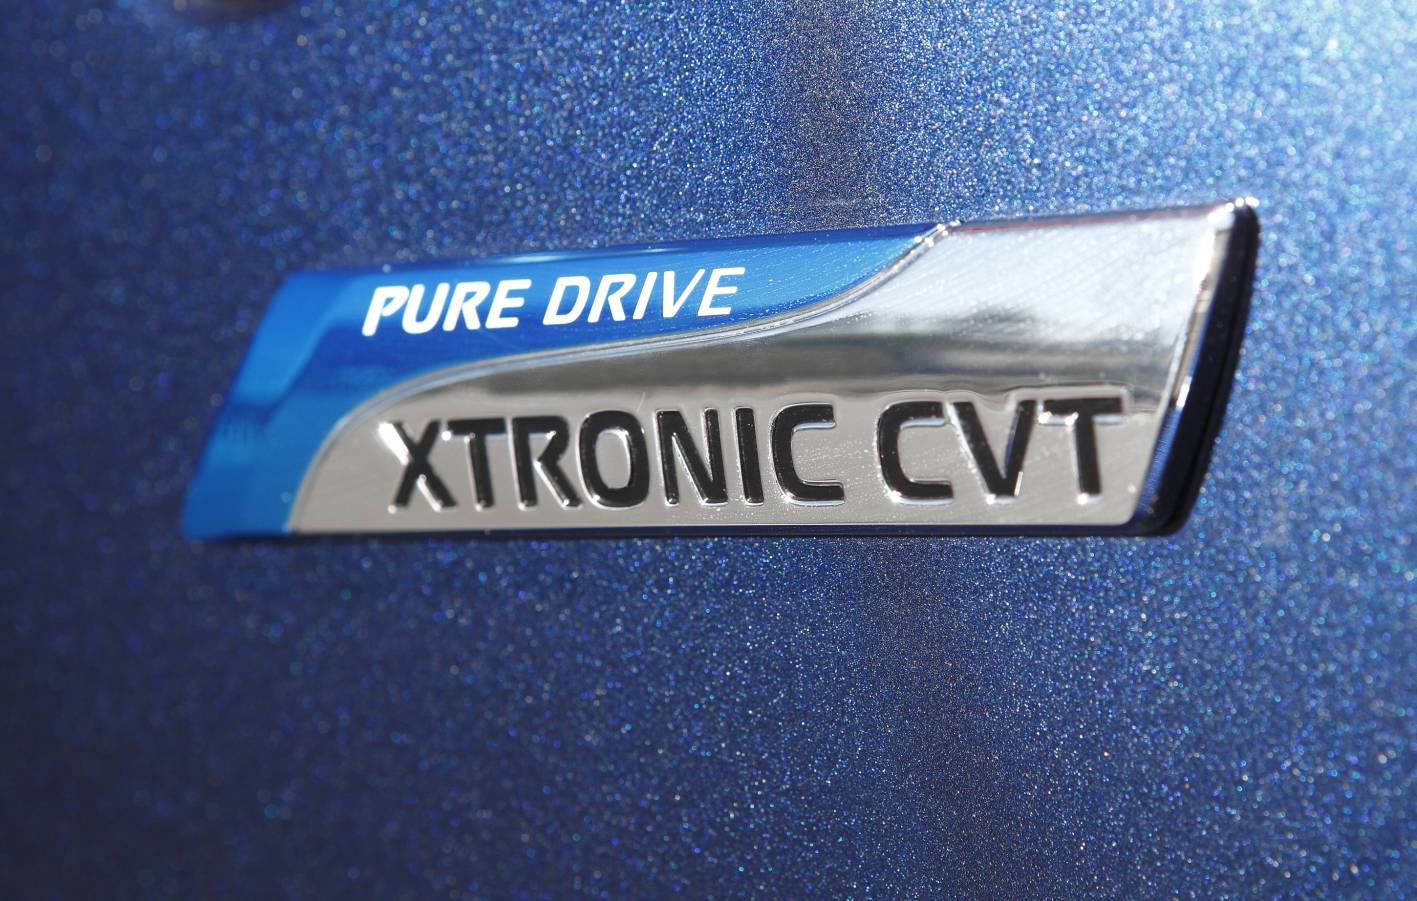 Nissan Xtronic CVT transmission under fire